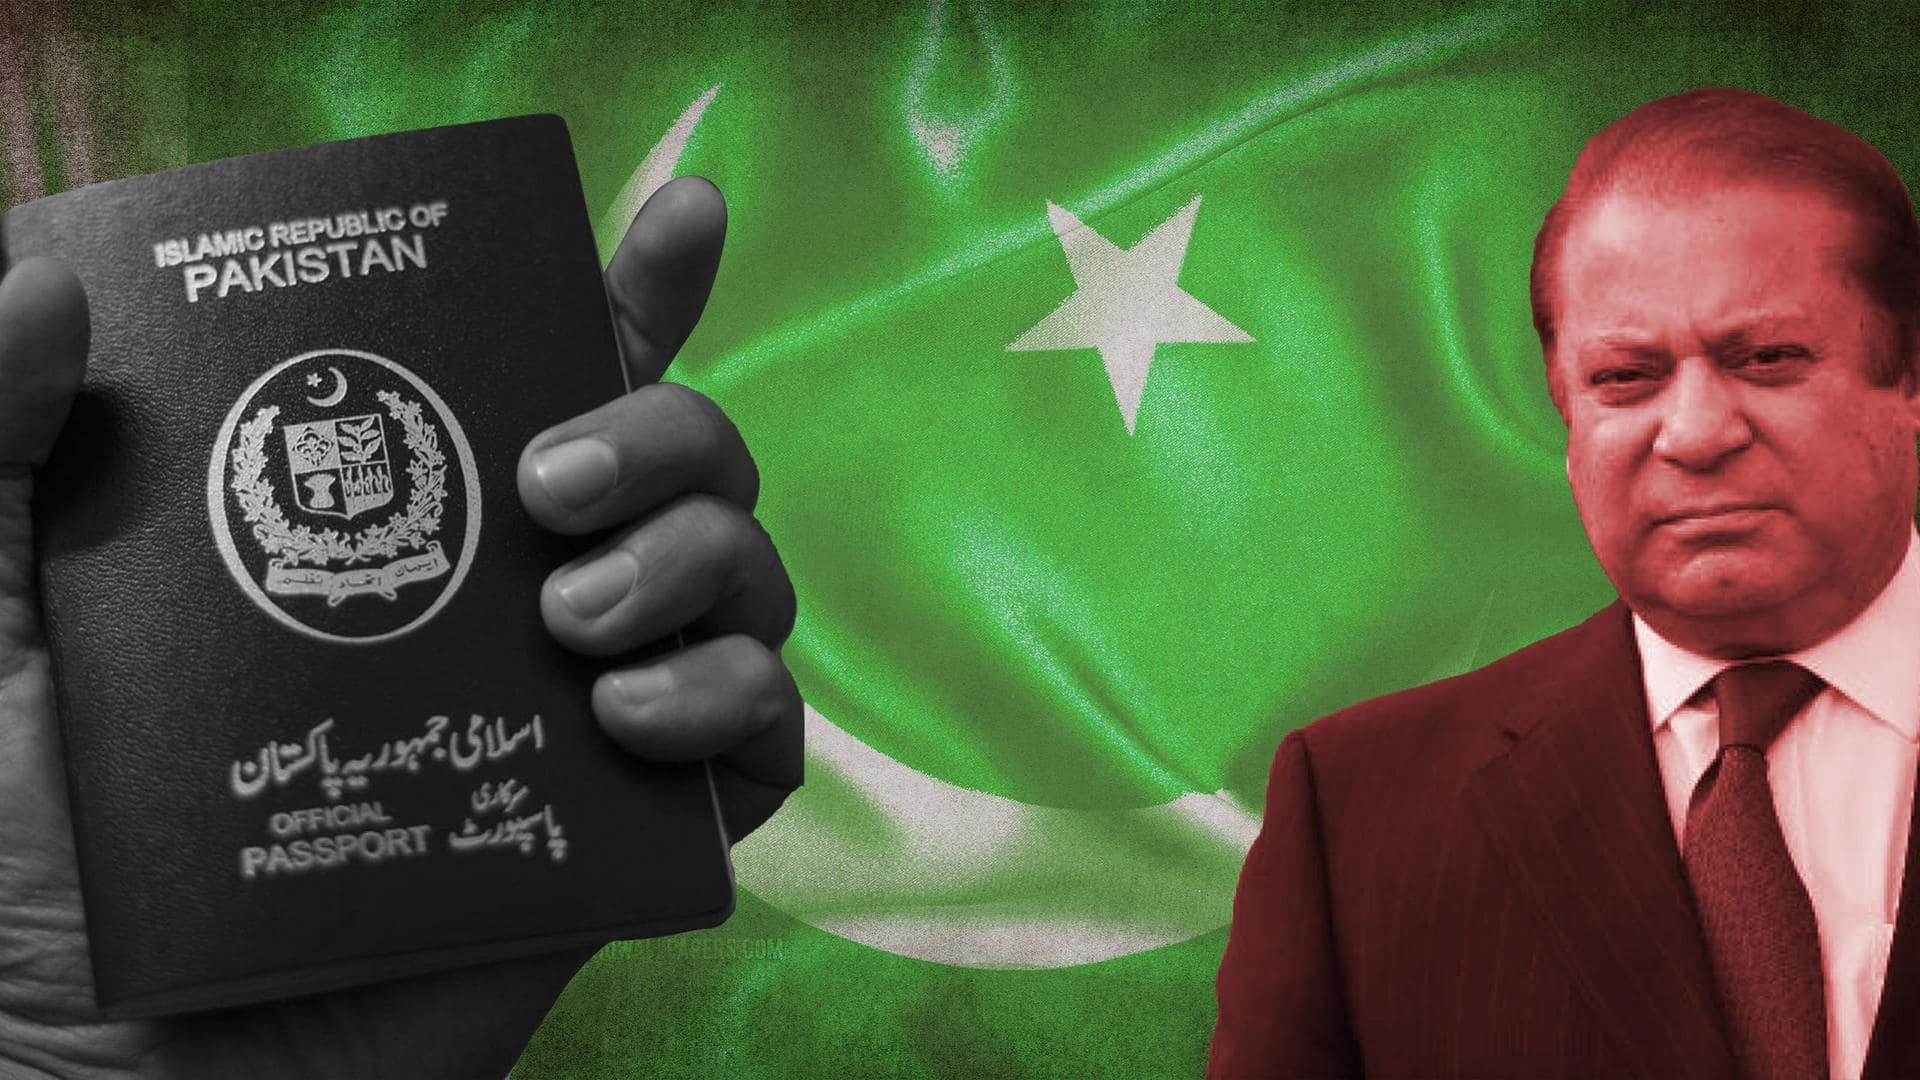 Nawaz Sharif may return after Pakistan government issues diplomatic passport